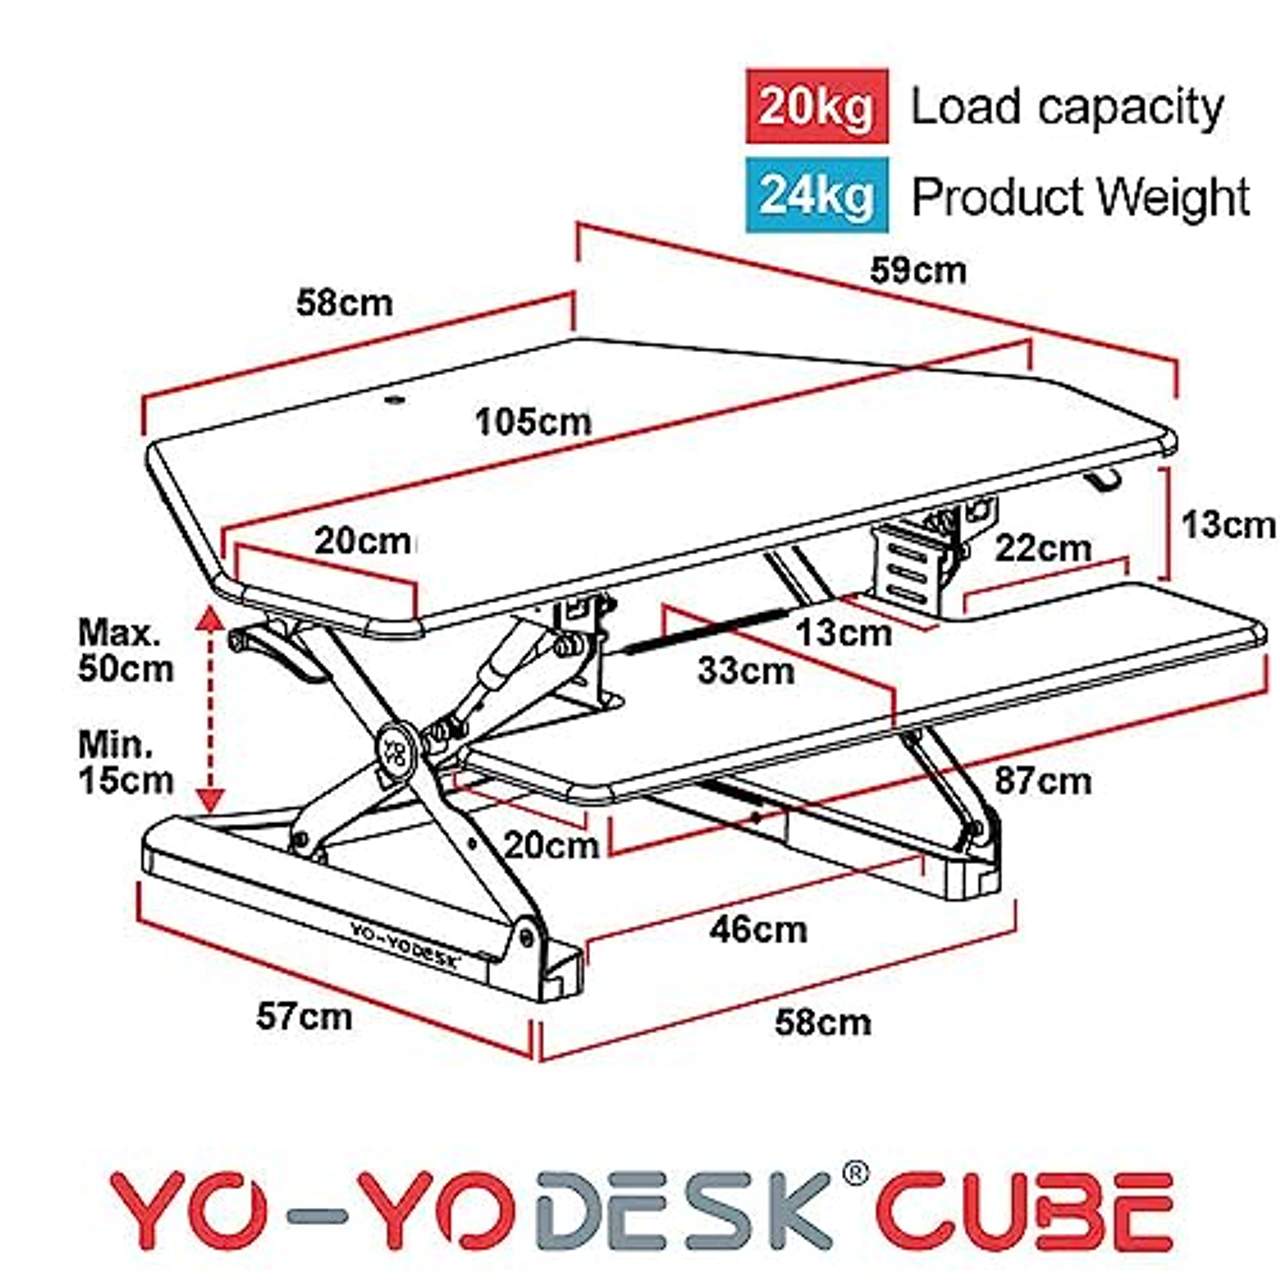 Yo-Yo DESK Cube Erweiterung